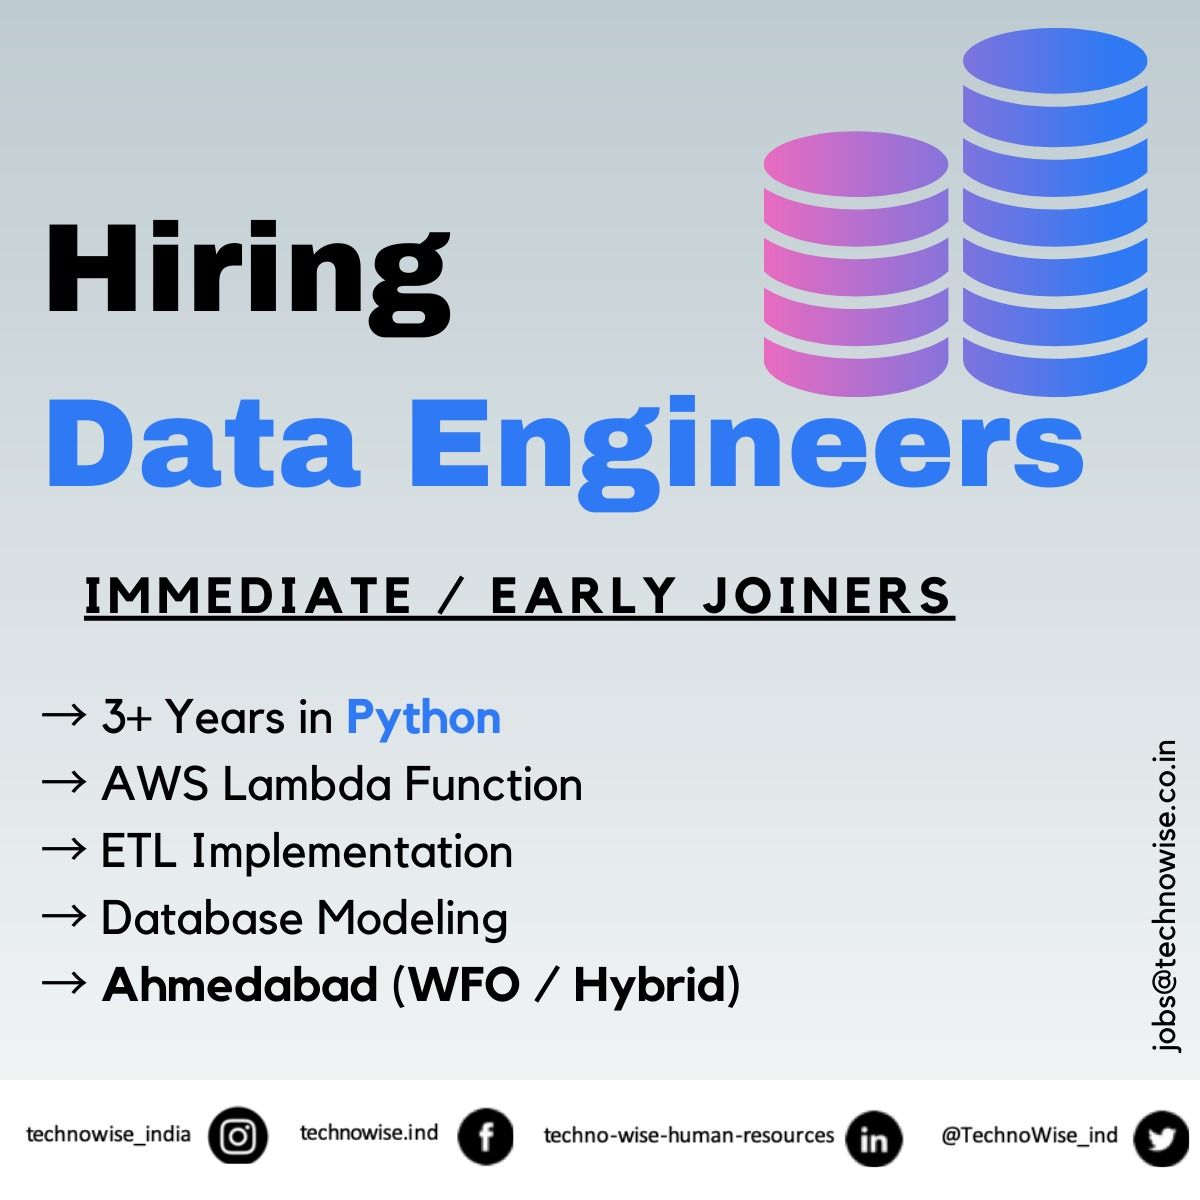 We're hiring 𝗗𝗮𝘁𝗮 𝗘𝗻𝗴𝗶𝗻𝗲𝗲𝗿𝘀 @𝗔𝗵𝗺𝗲𝗱𝗮𝗯𝗮𝗱 𝗹𝗼𝗰𝗮𝘁𝗶𝗼𝗻

→ 3+ Years in Python
→ AWS Lambda Function Expertise
→ ETL Implementation and Data Modeling Skills

#DataEngineer #AWSLambda #Python #ETL #DataModelling

Follow: #TechnoWise_India